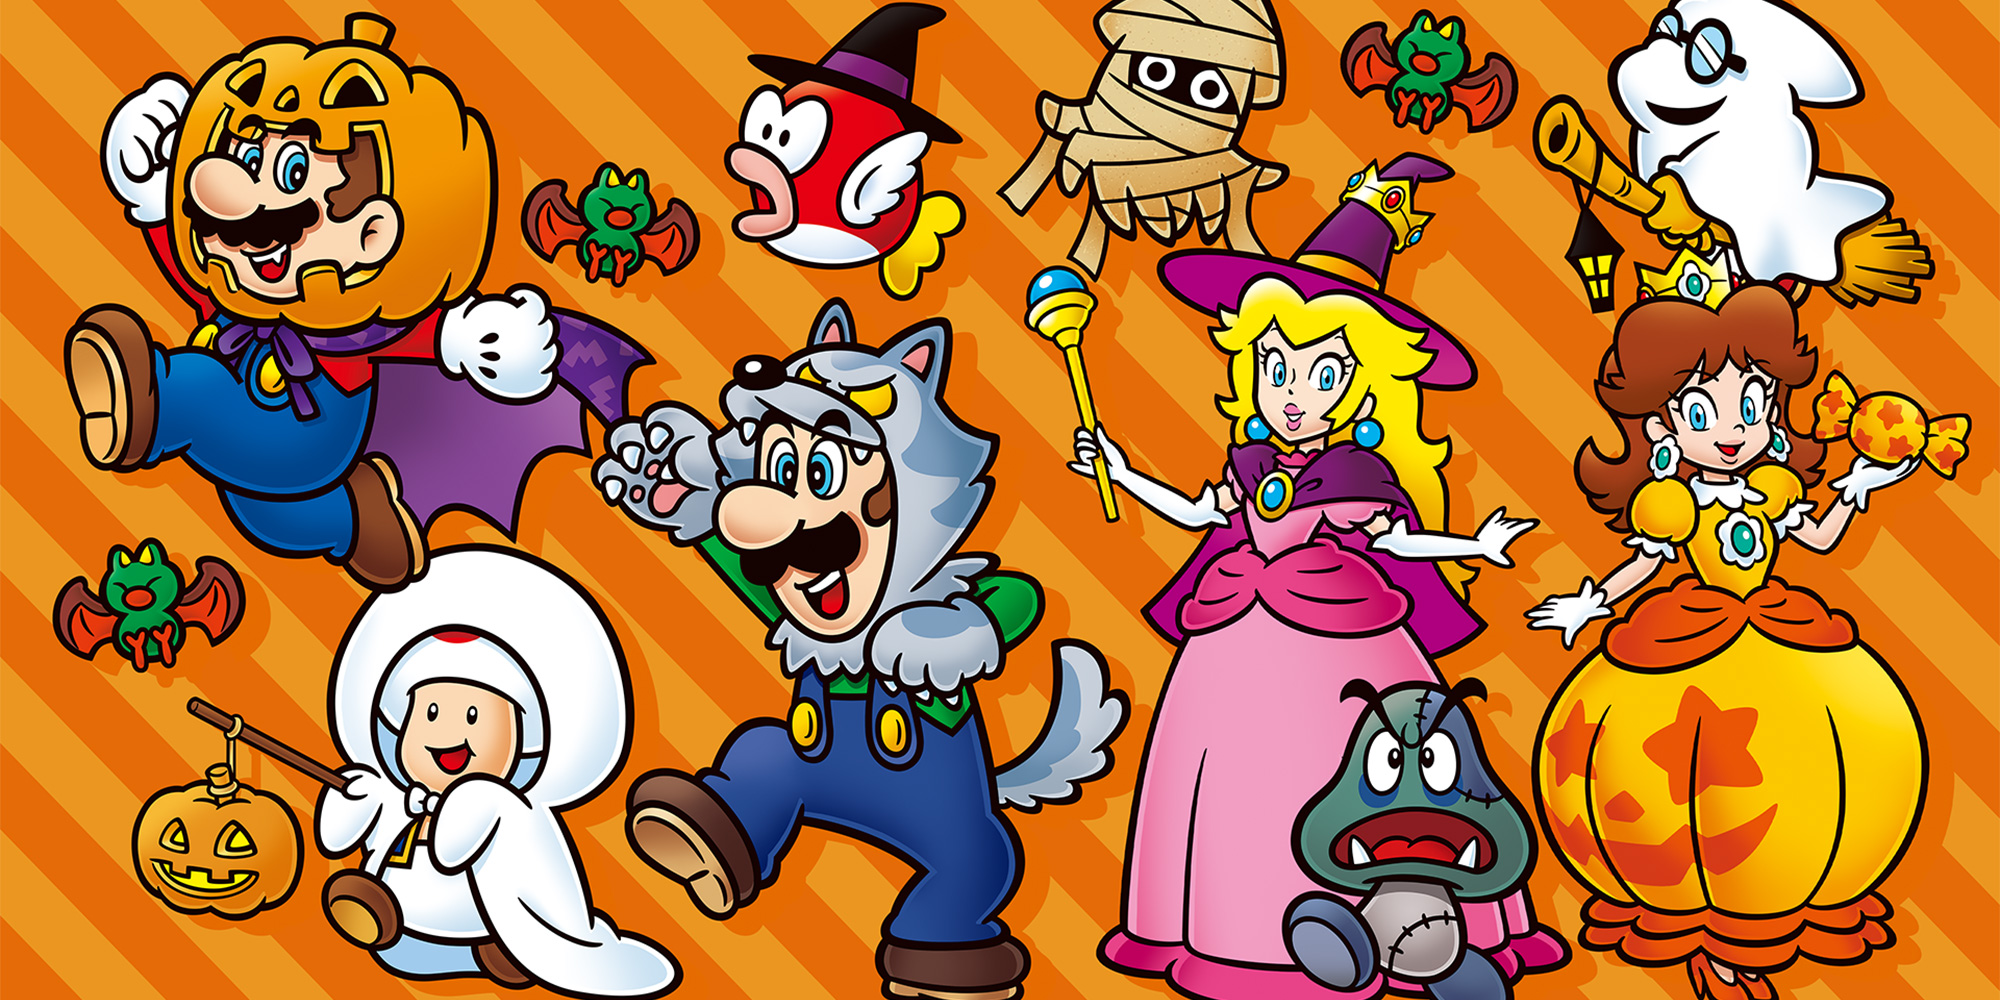 Paseo colección prima Pásalo de miedo este Halloween con Nintendo Switch! | Noticias | Nintendo